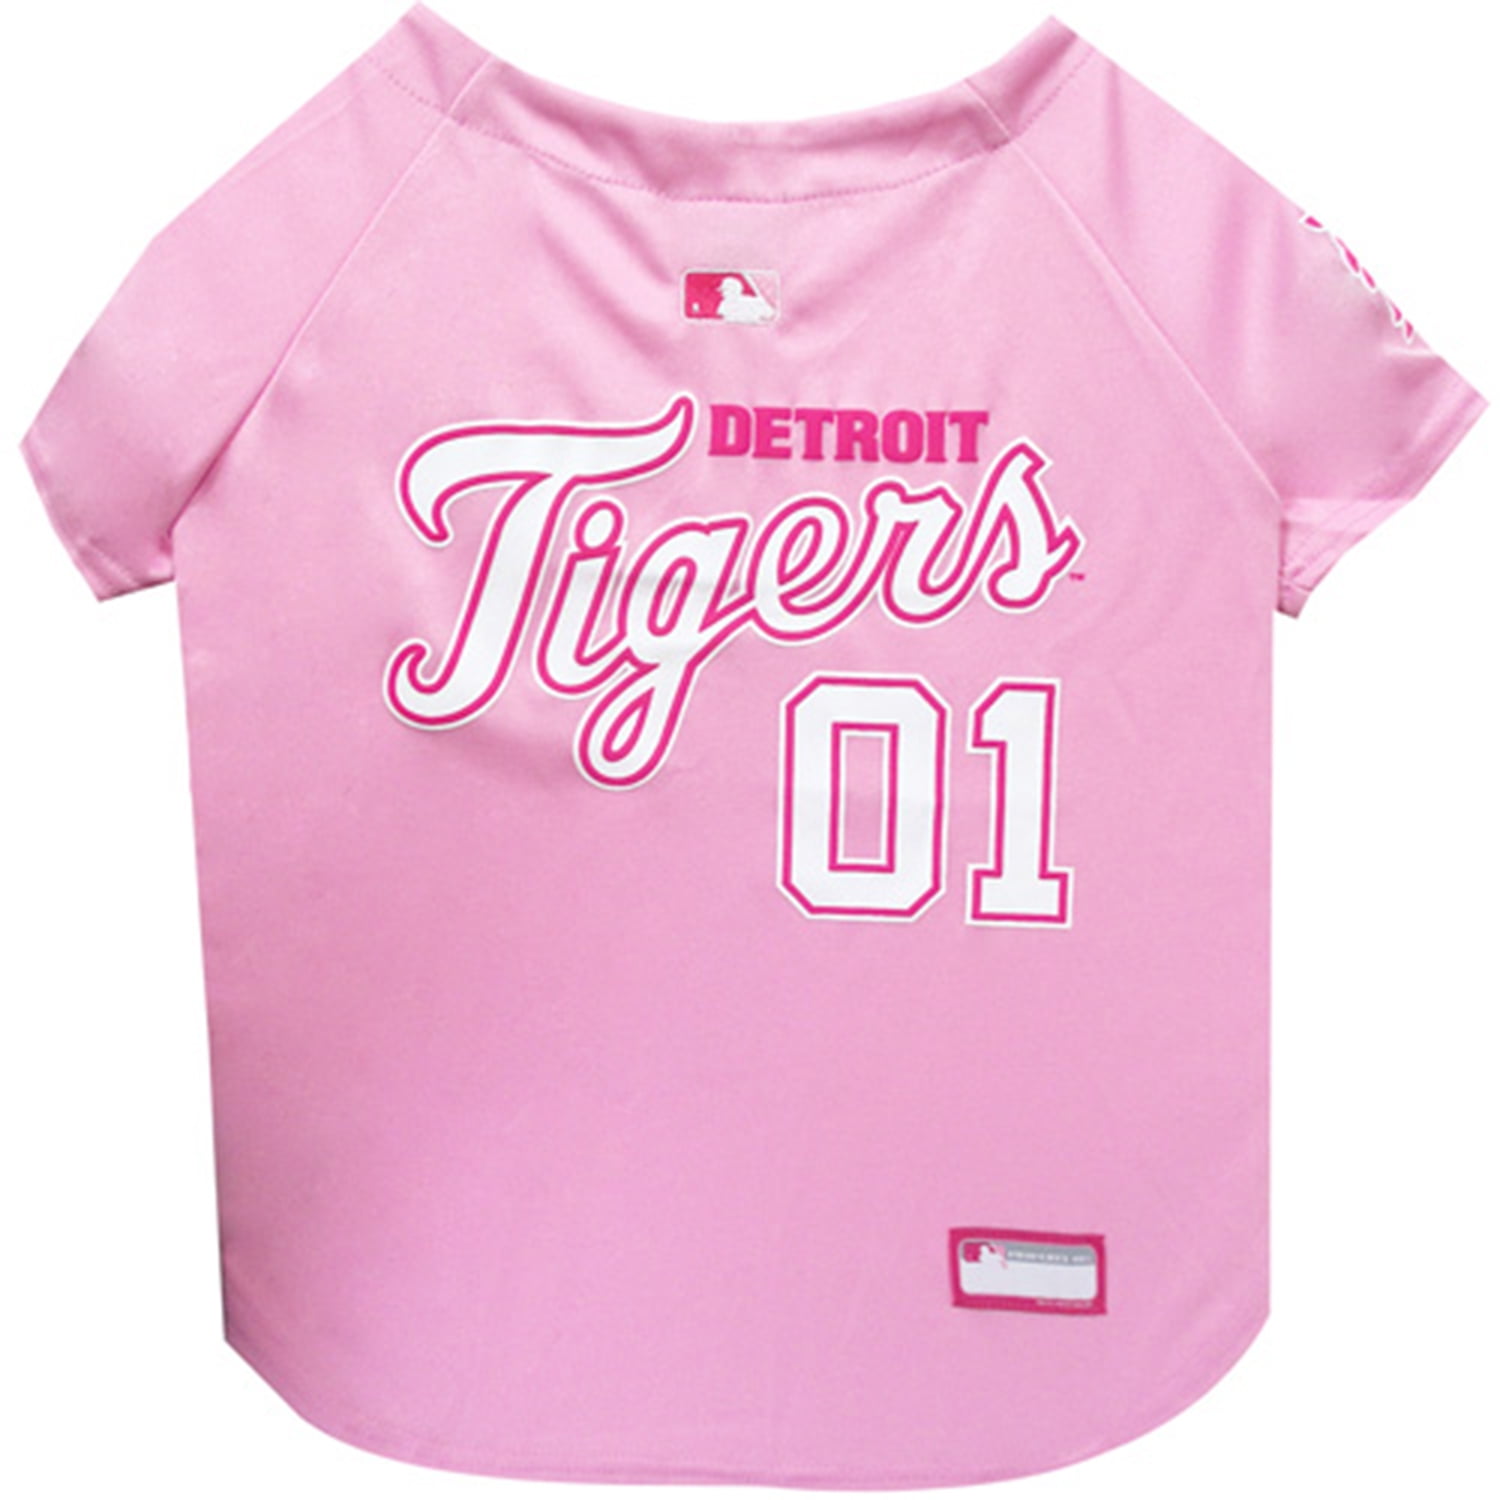 detroit tigers baseball jersey